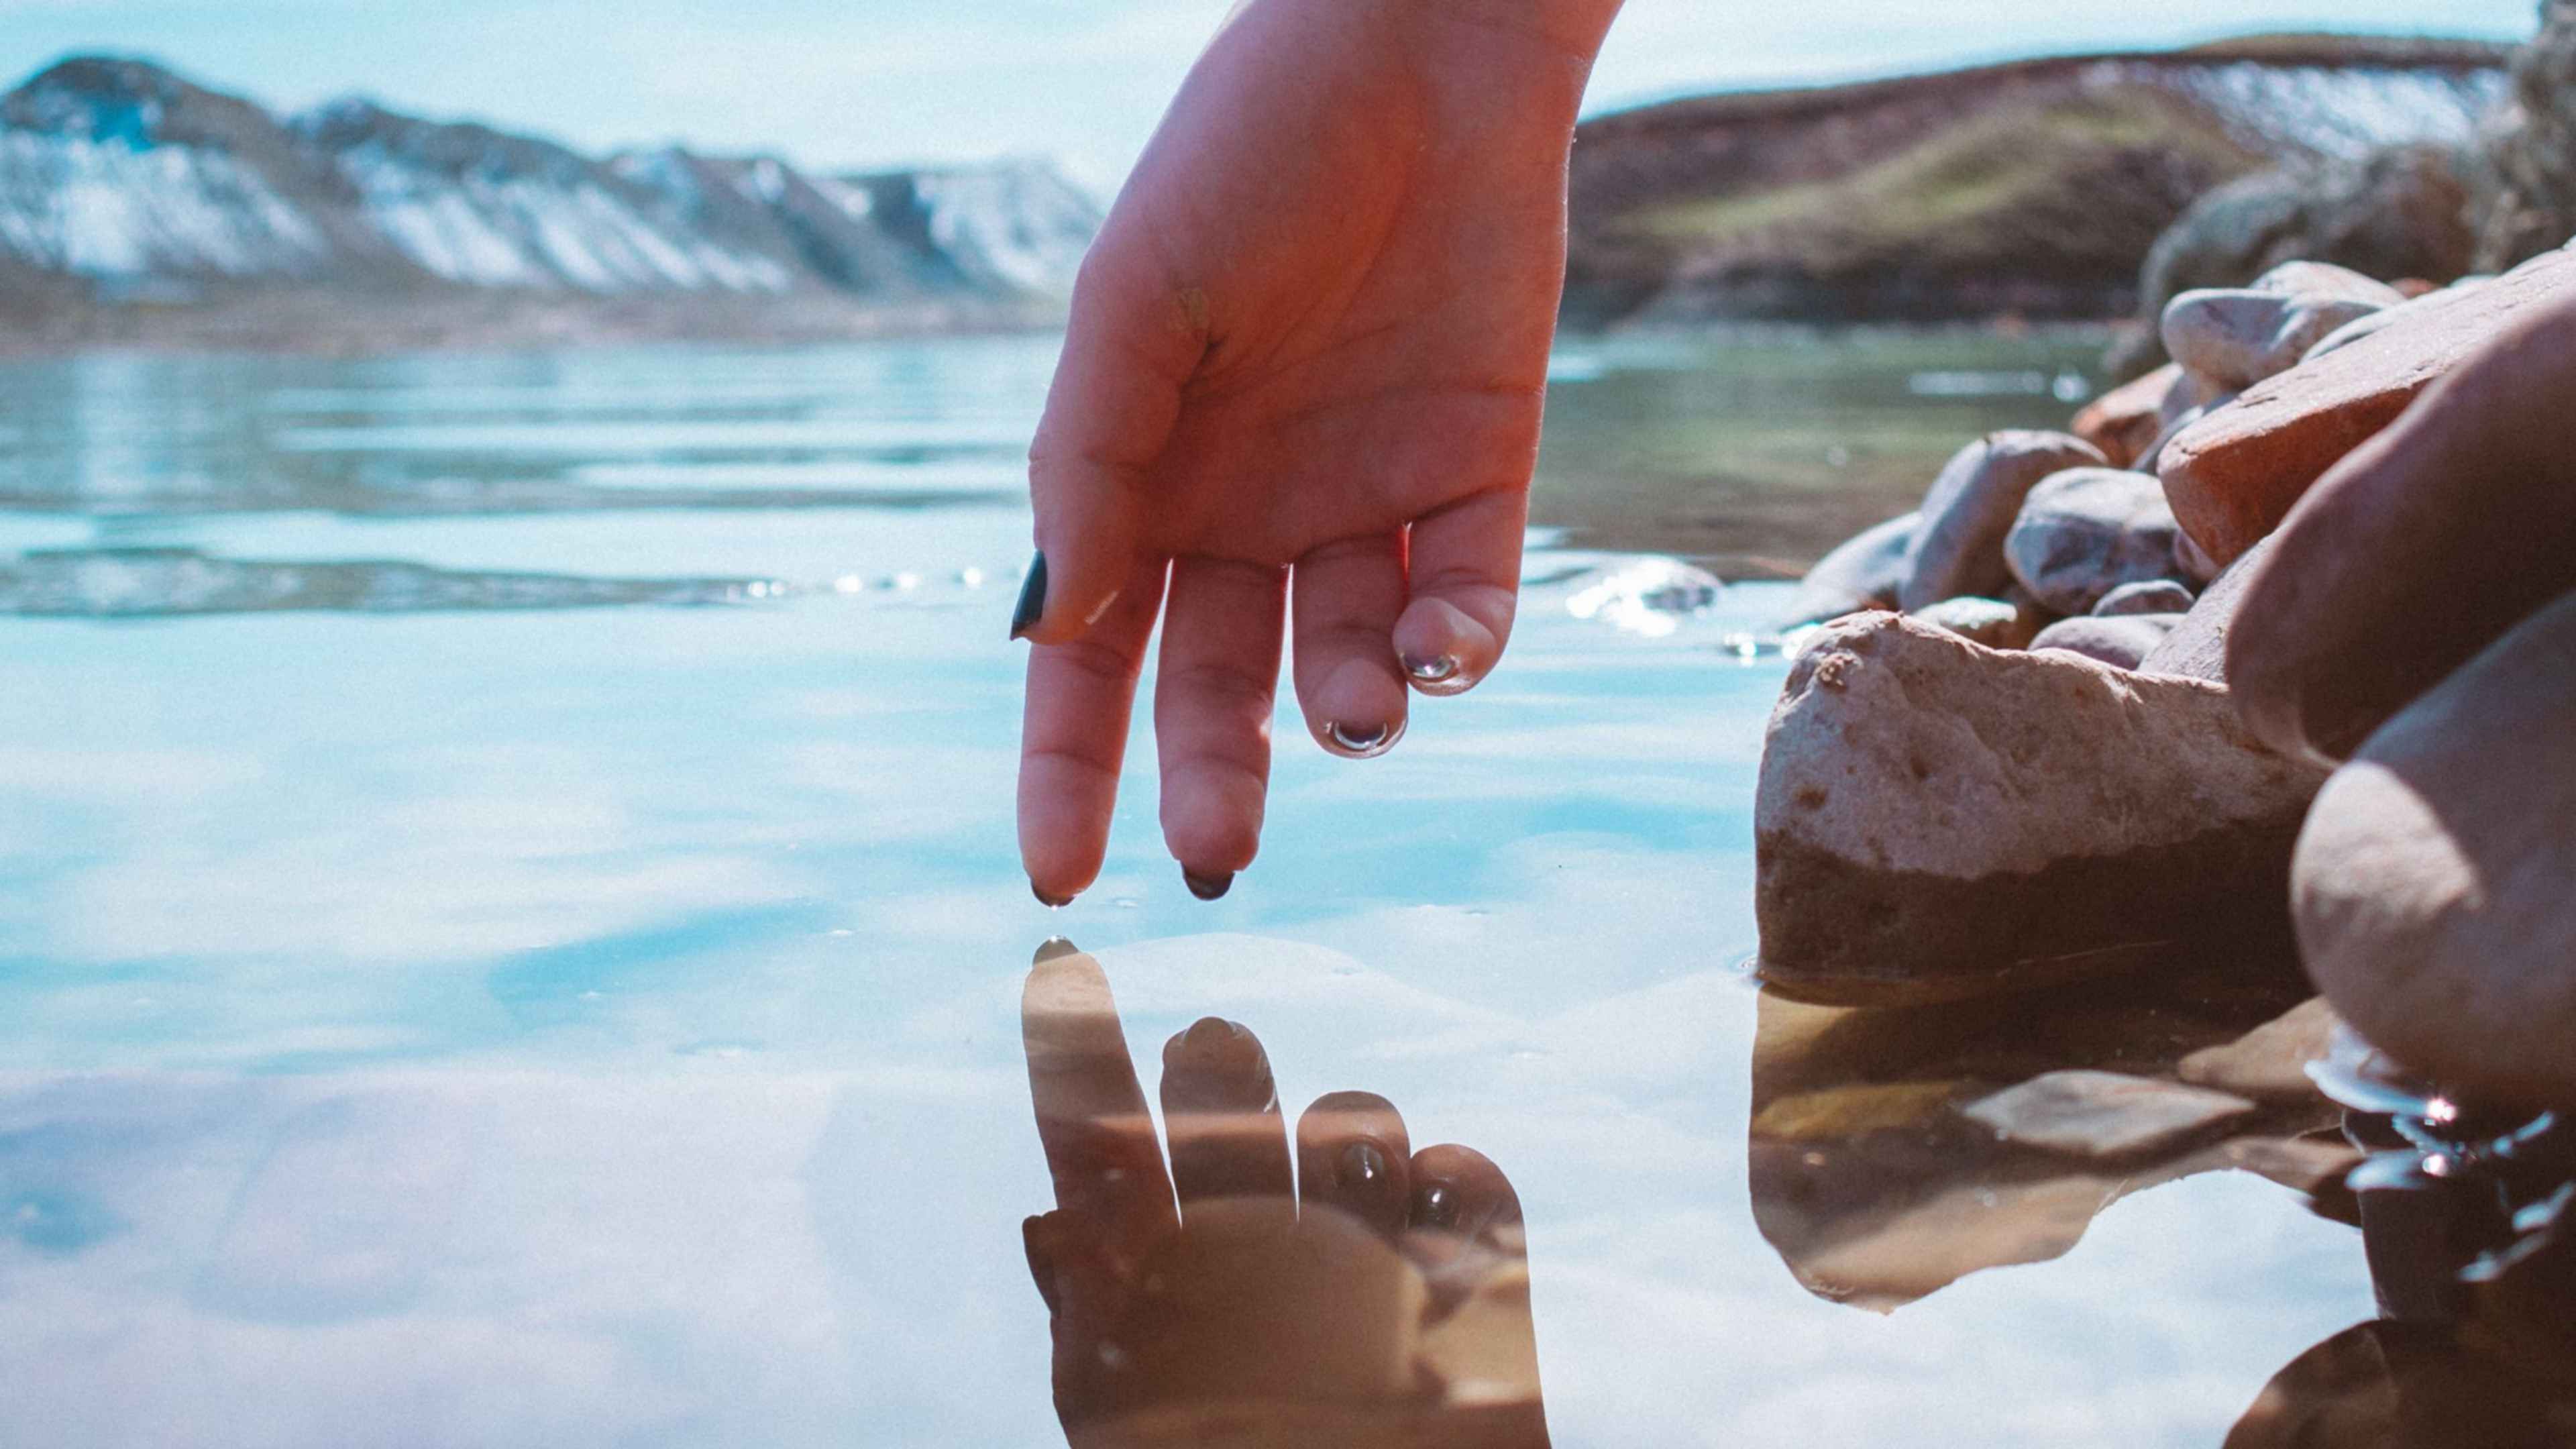 Водички руки. Вода Эстетика. Вода в руках. Руки в воде Эстетика. Вода в ладонях.